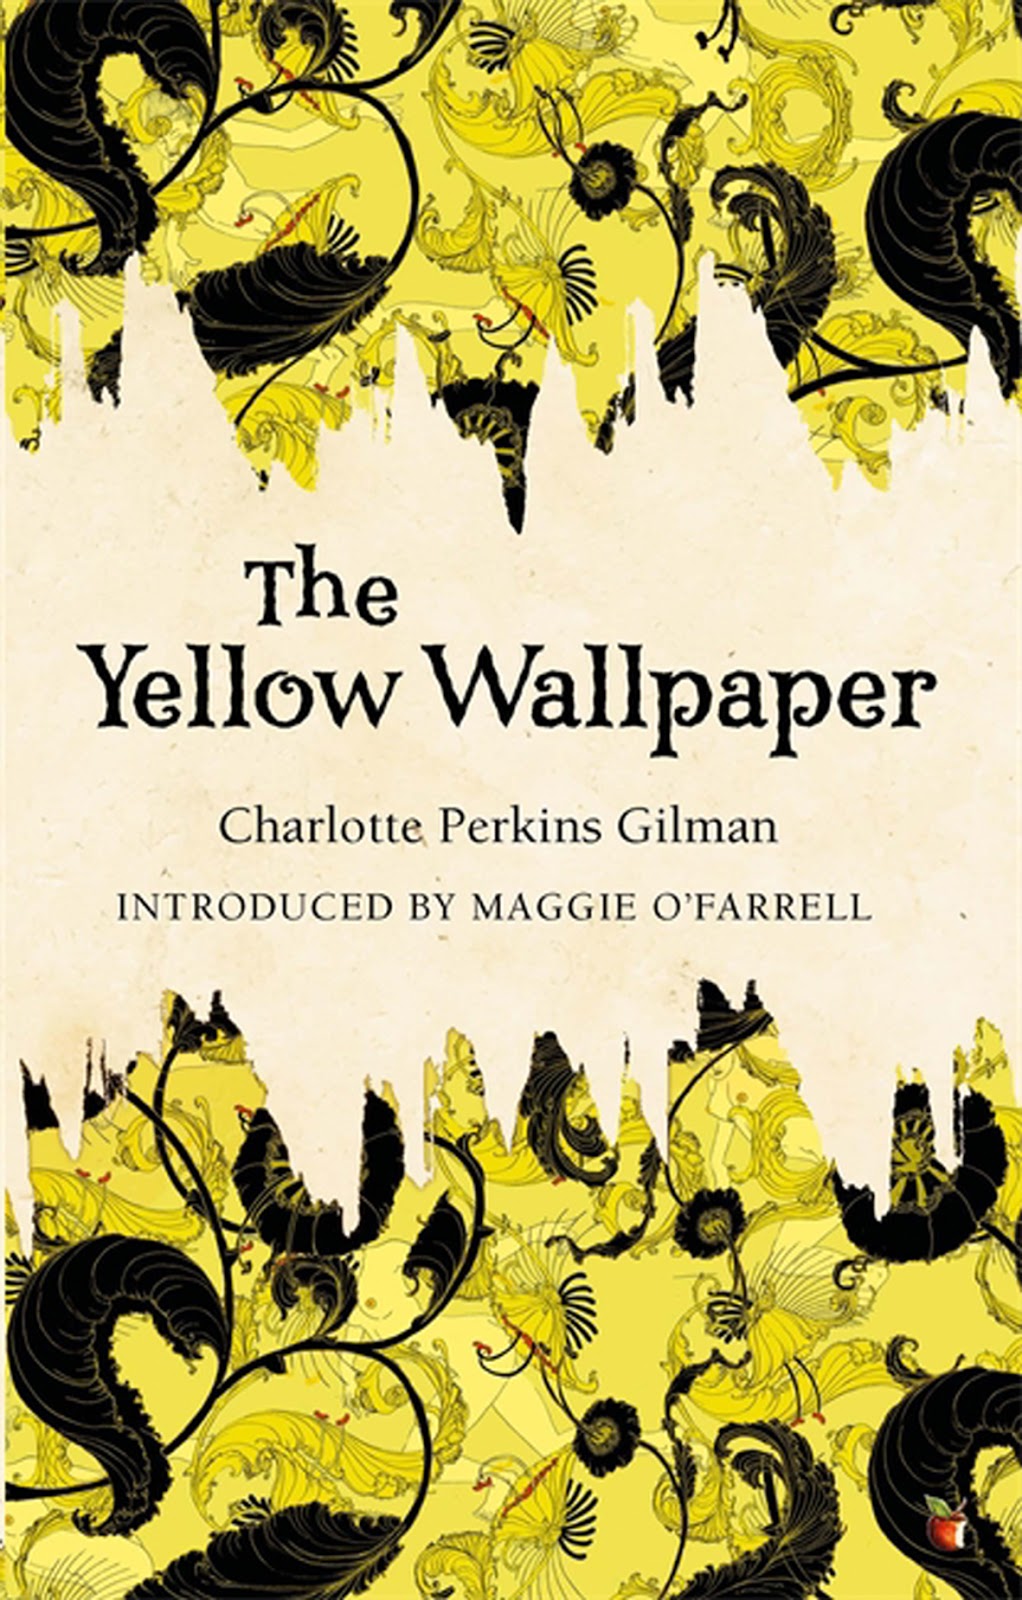 The yellow wallpaper essay